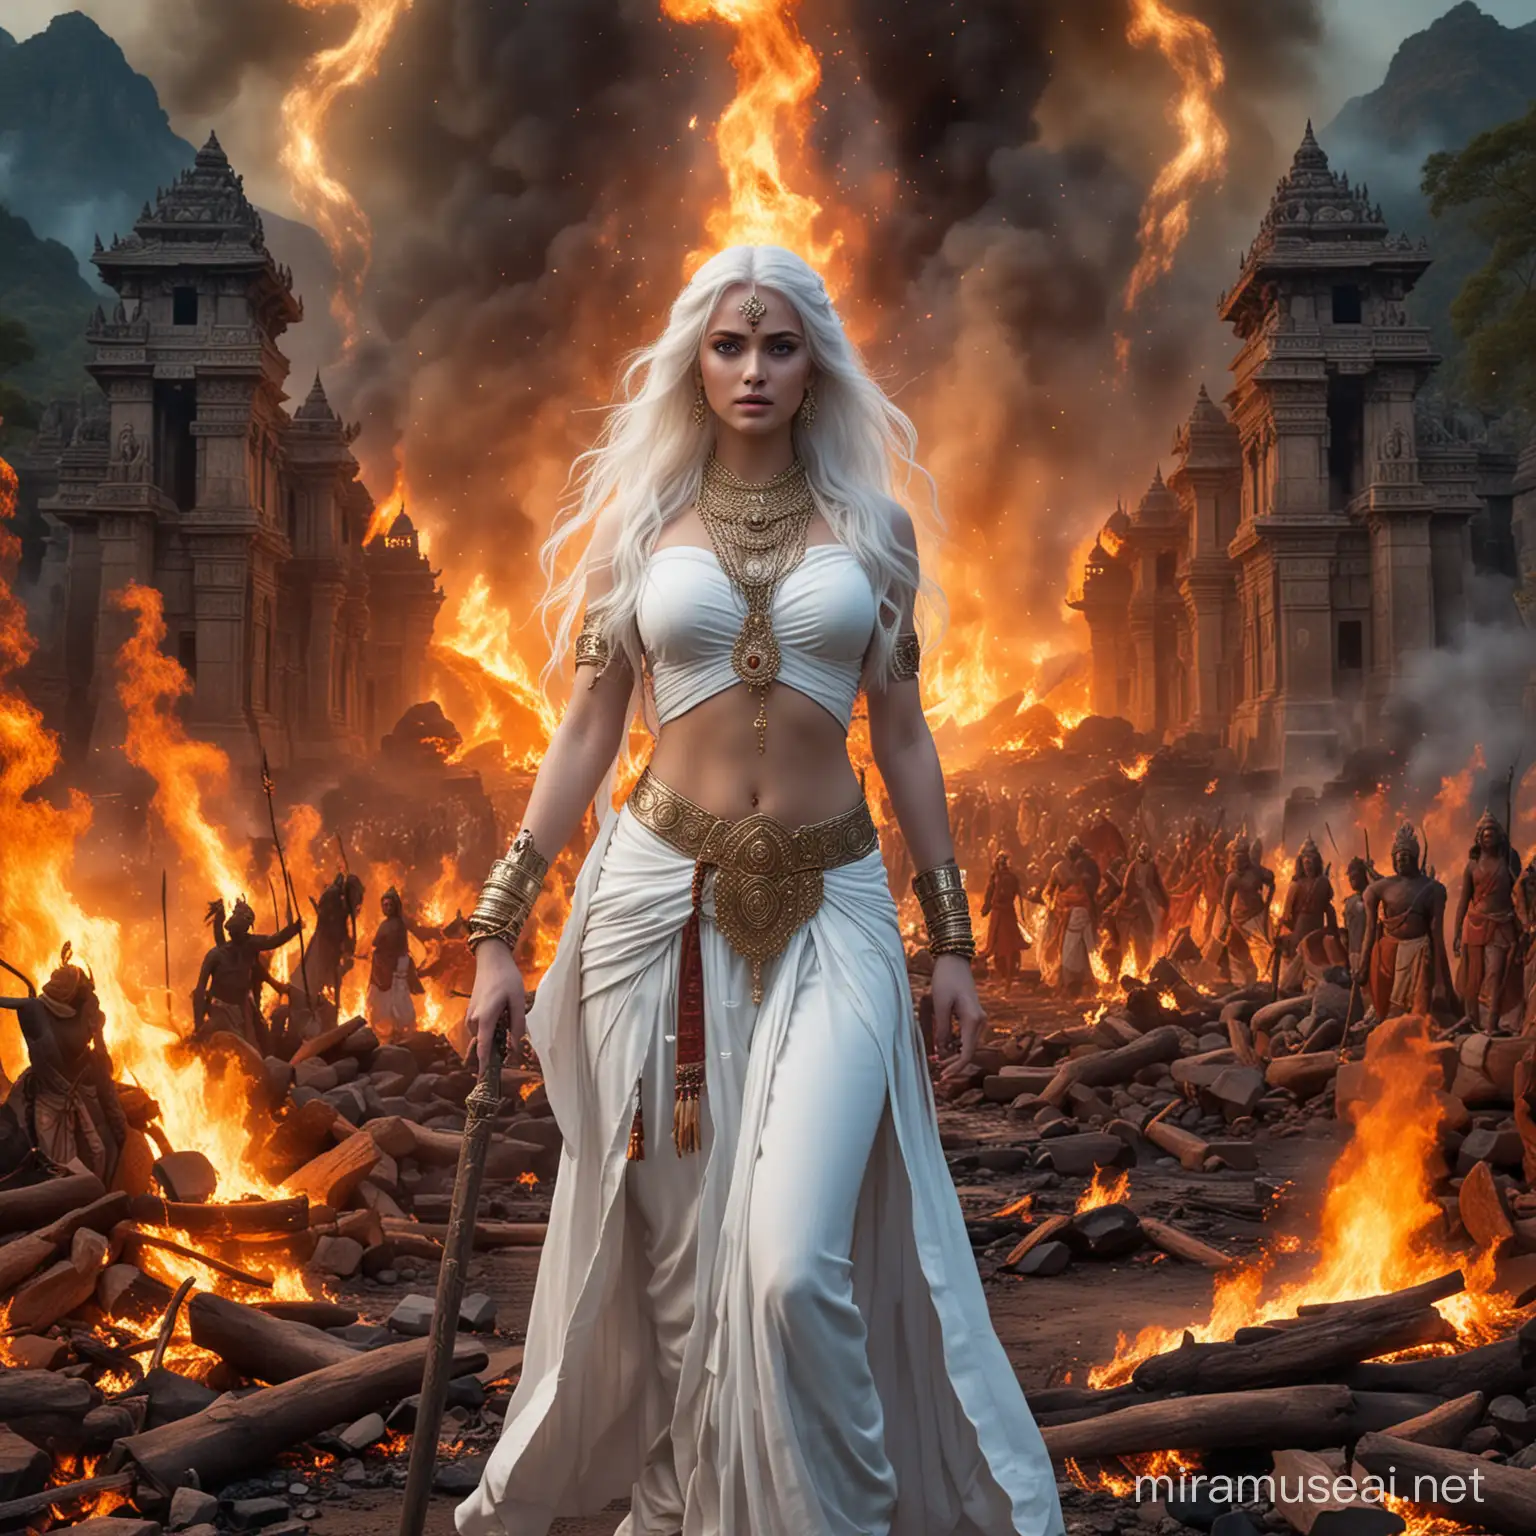 Hindu Empress Goddess in Fiery Combat with Demonic Deities